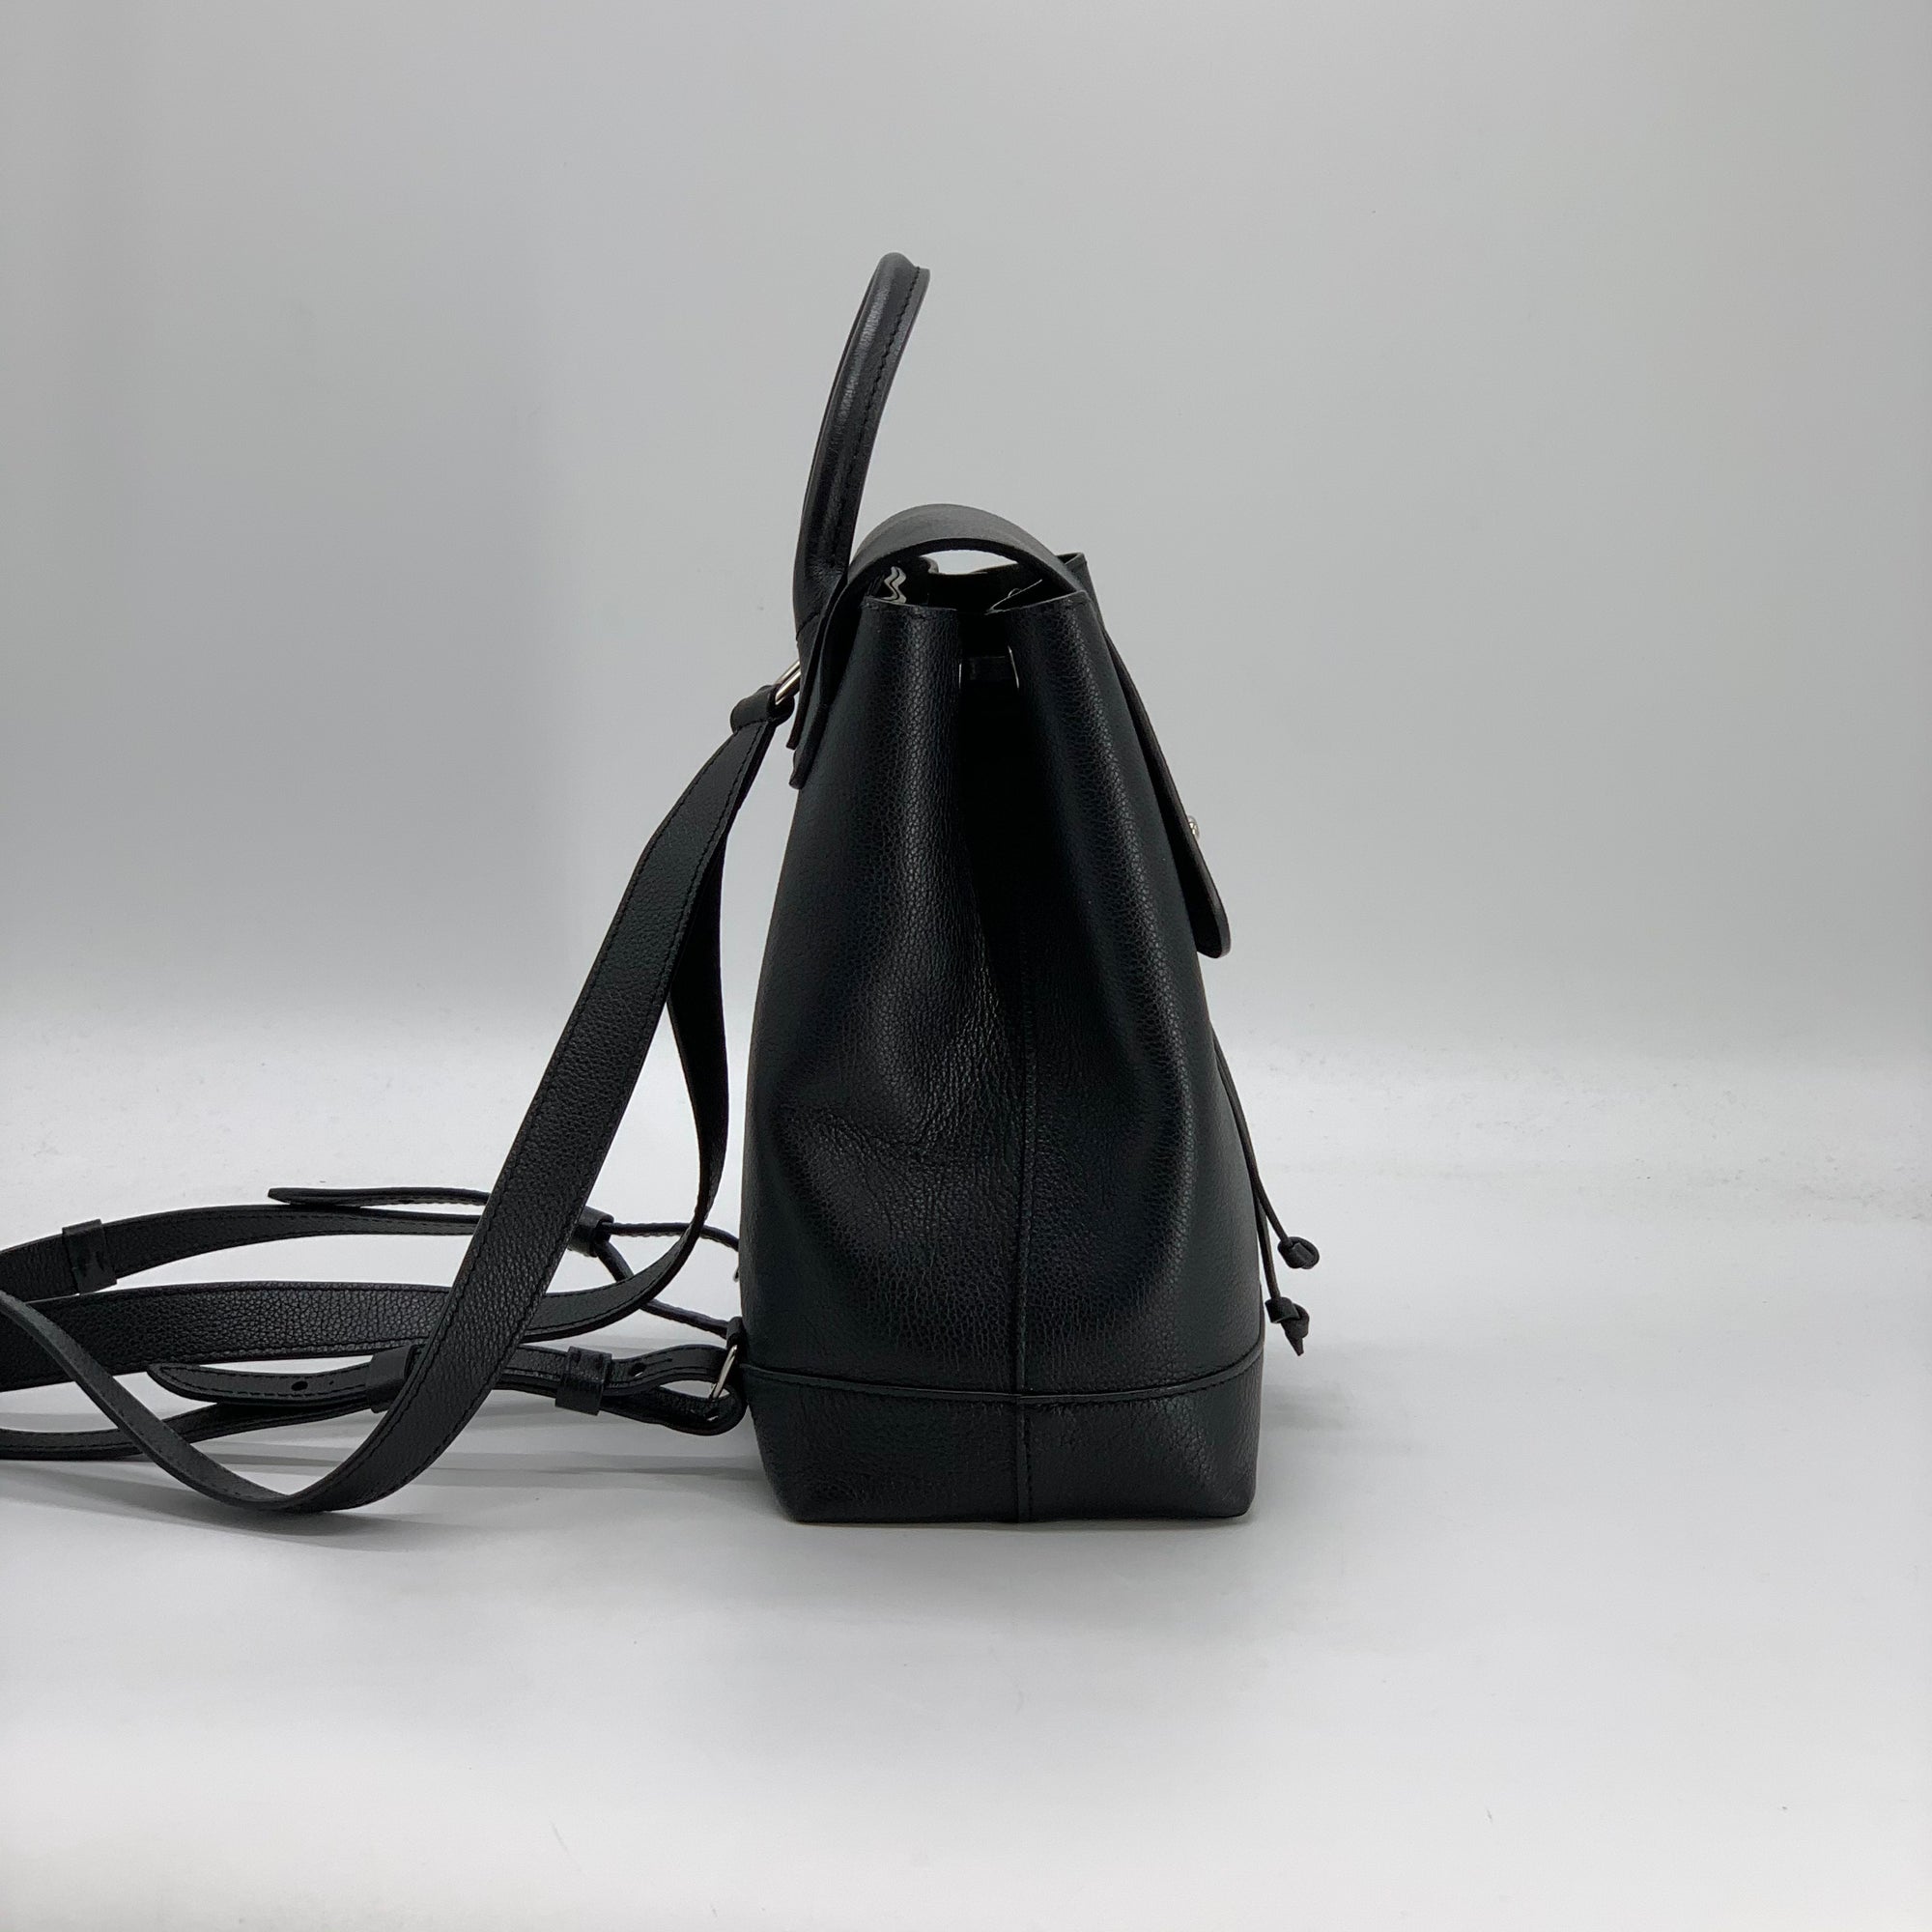 M41815 Louis Vuitton 2016 Leather Lockme Backpack-Black